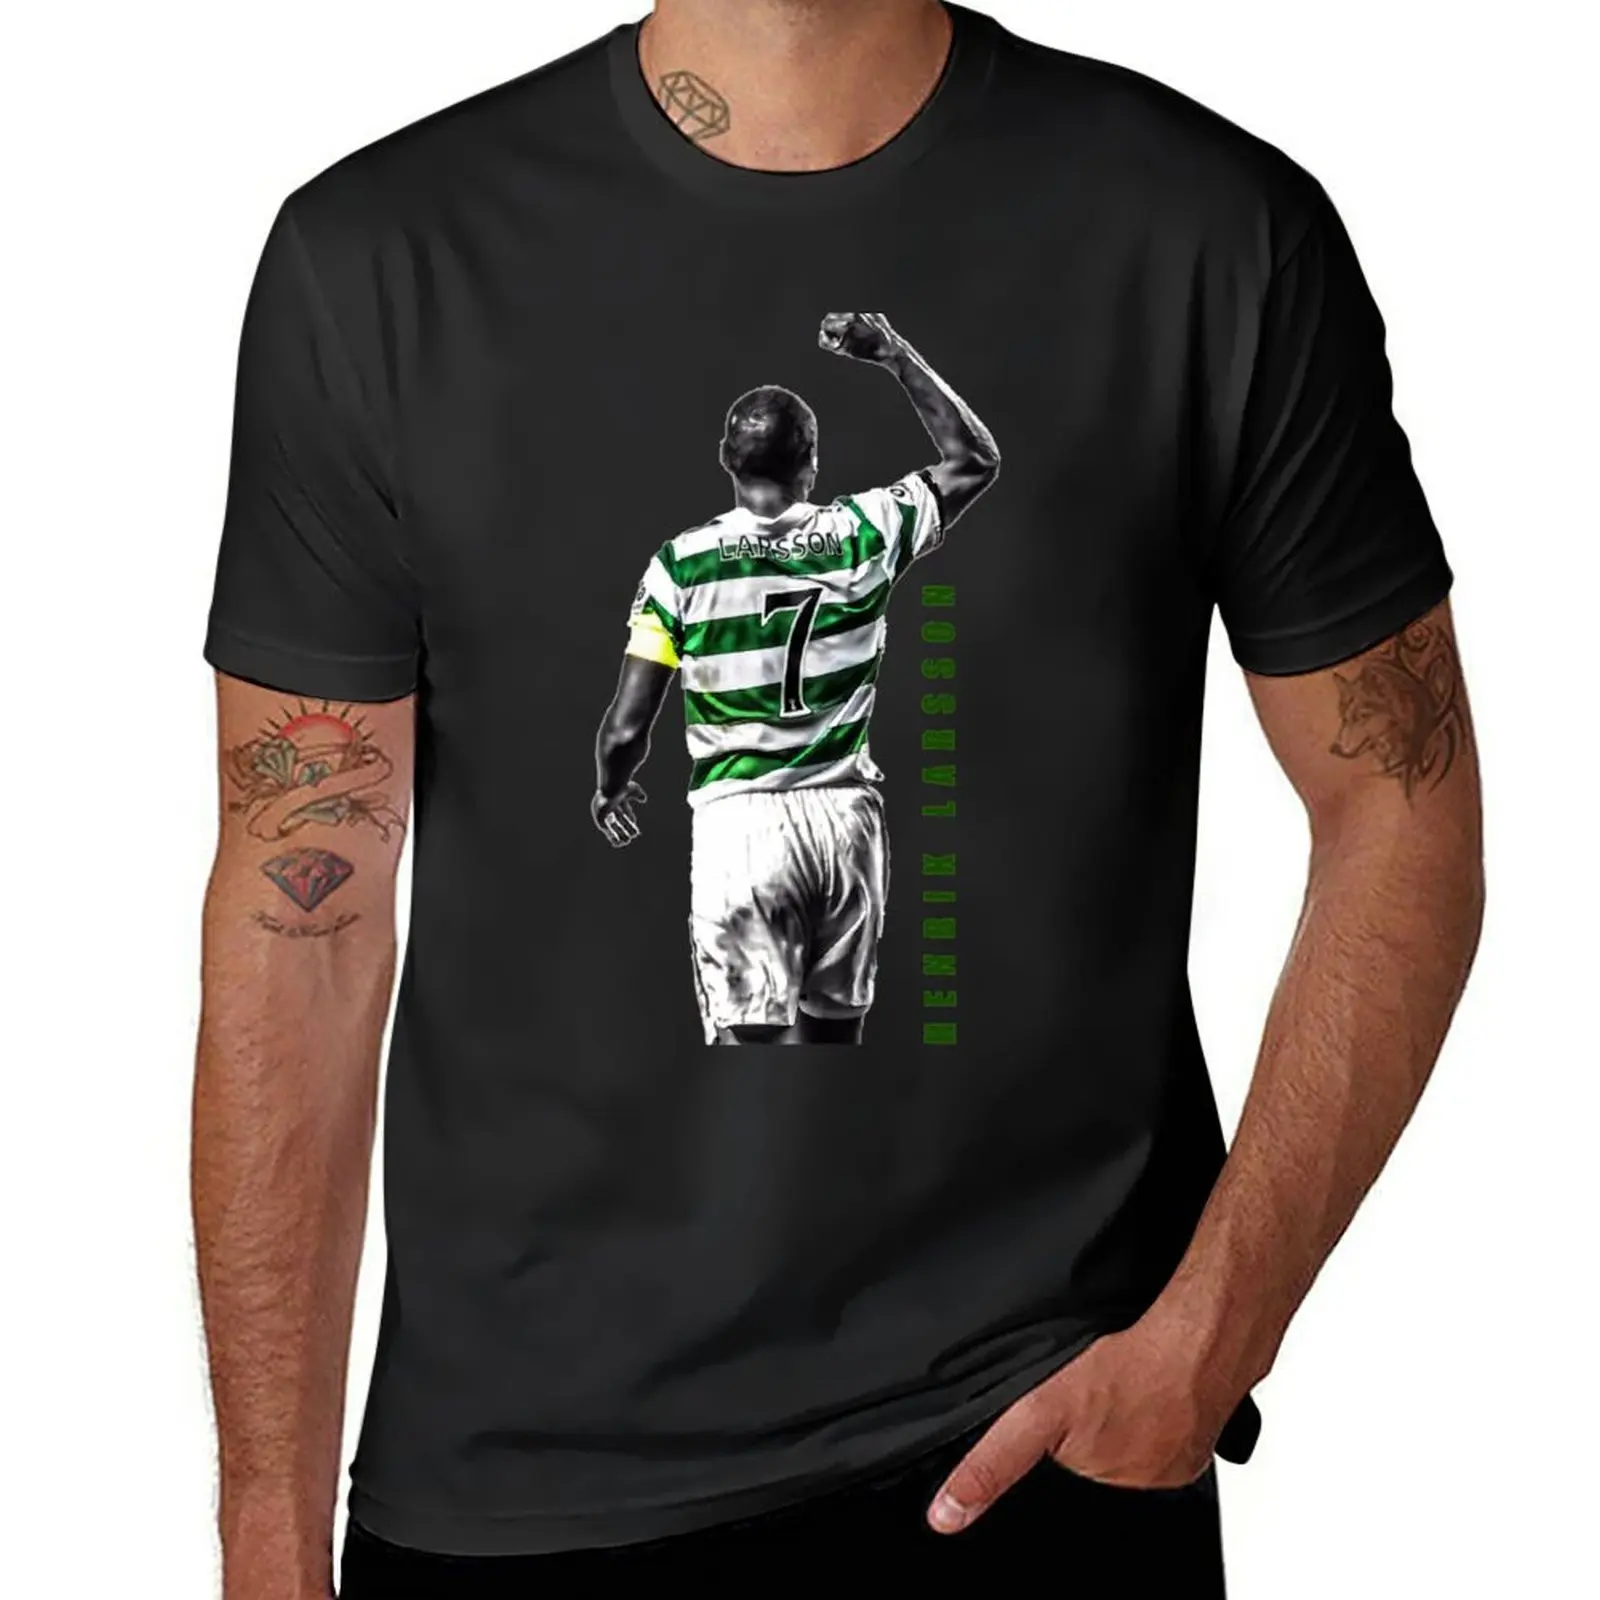 Henrik Larsson T-shirt